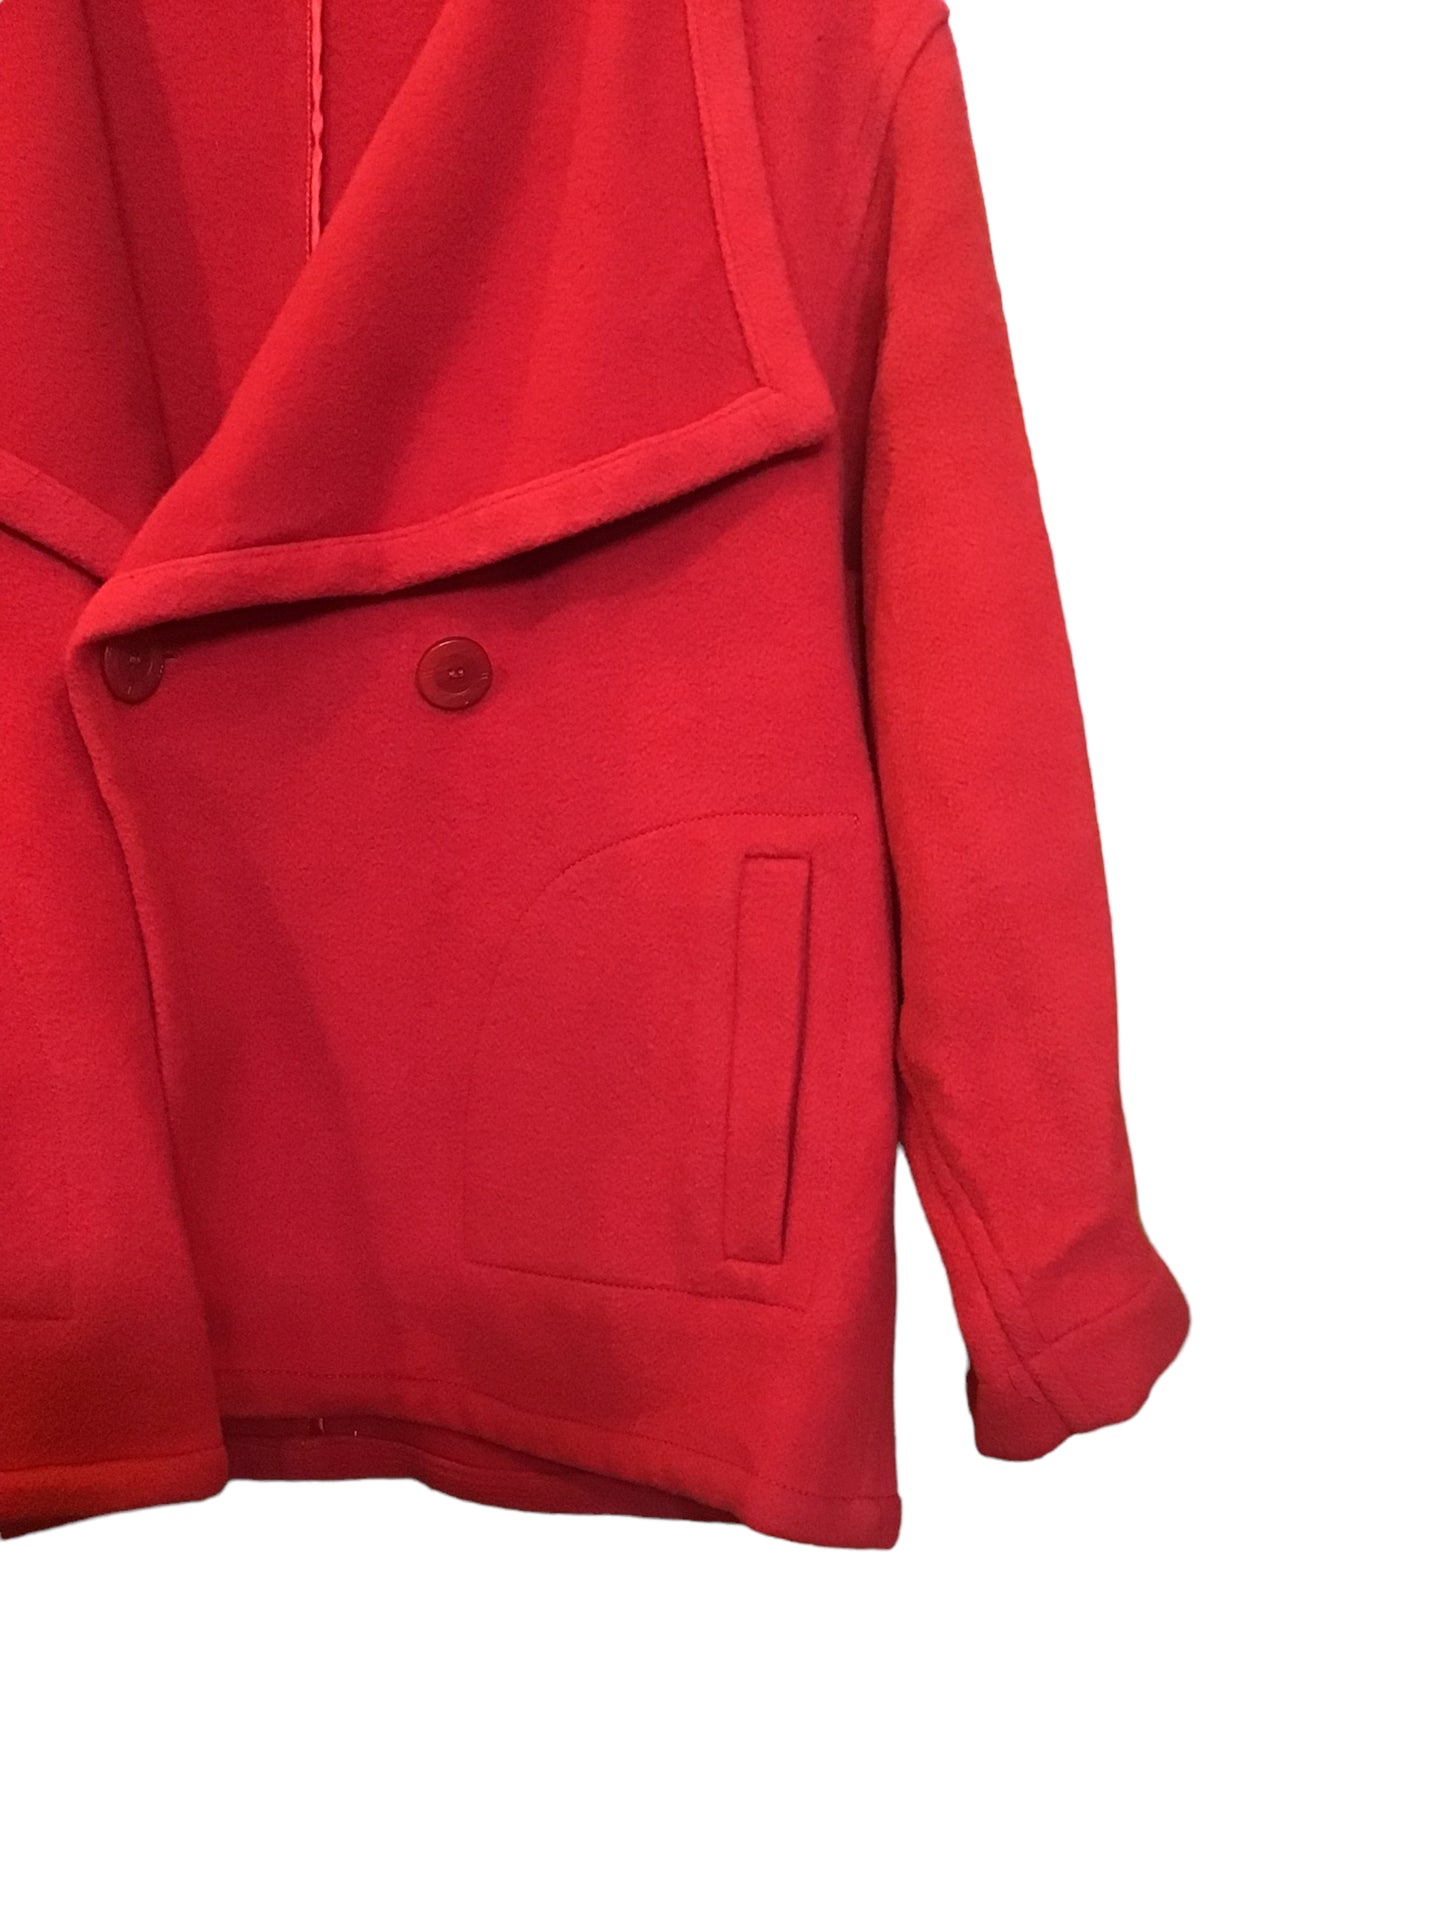 Women’s Red Jacket (Size XL)